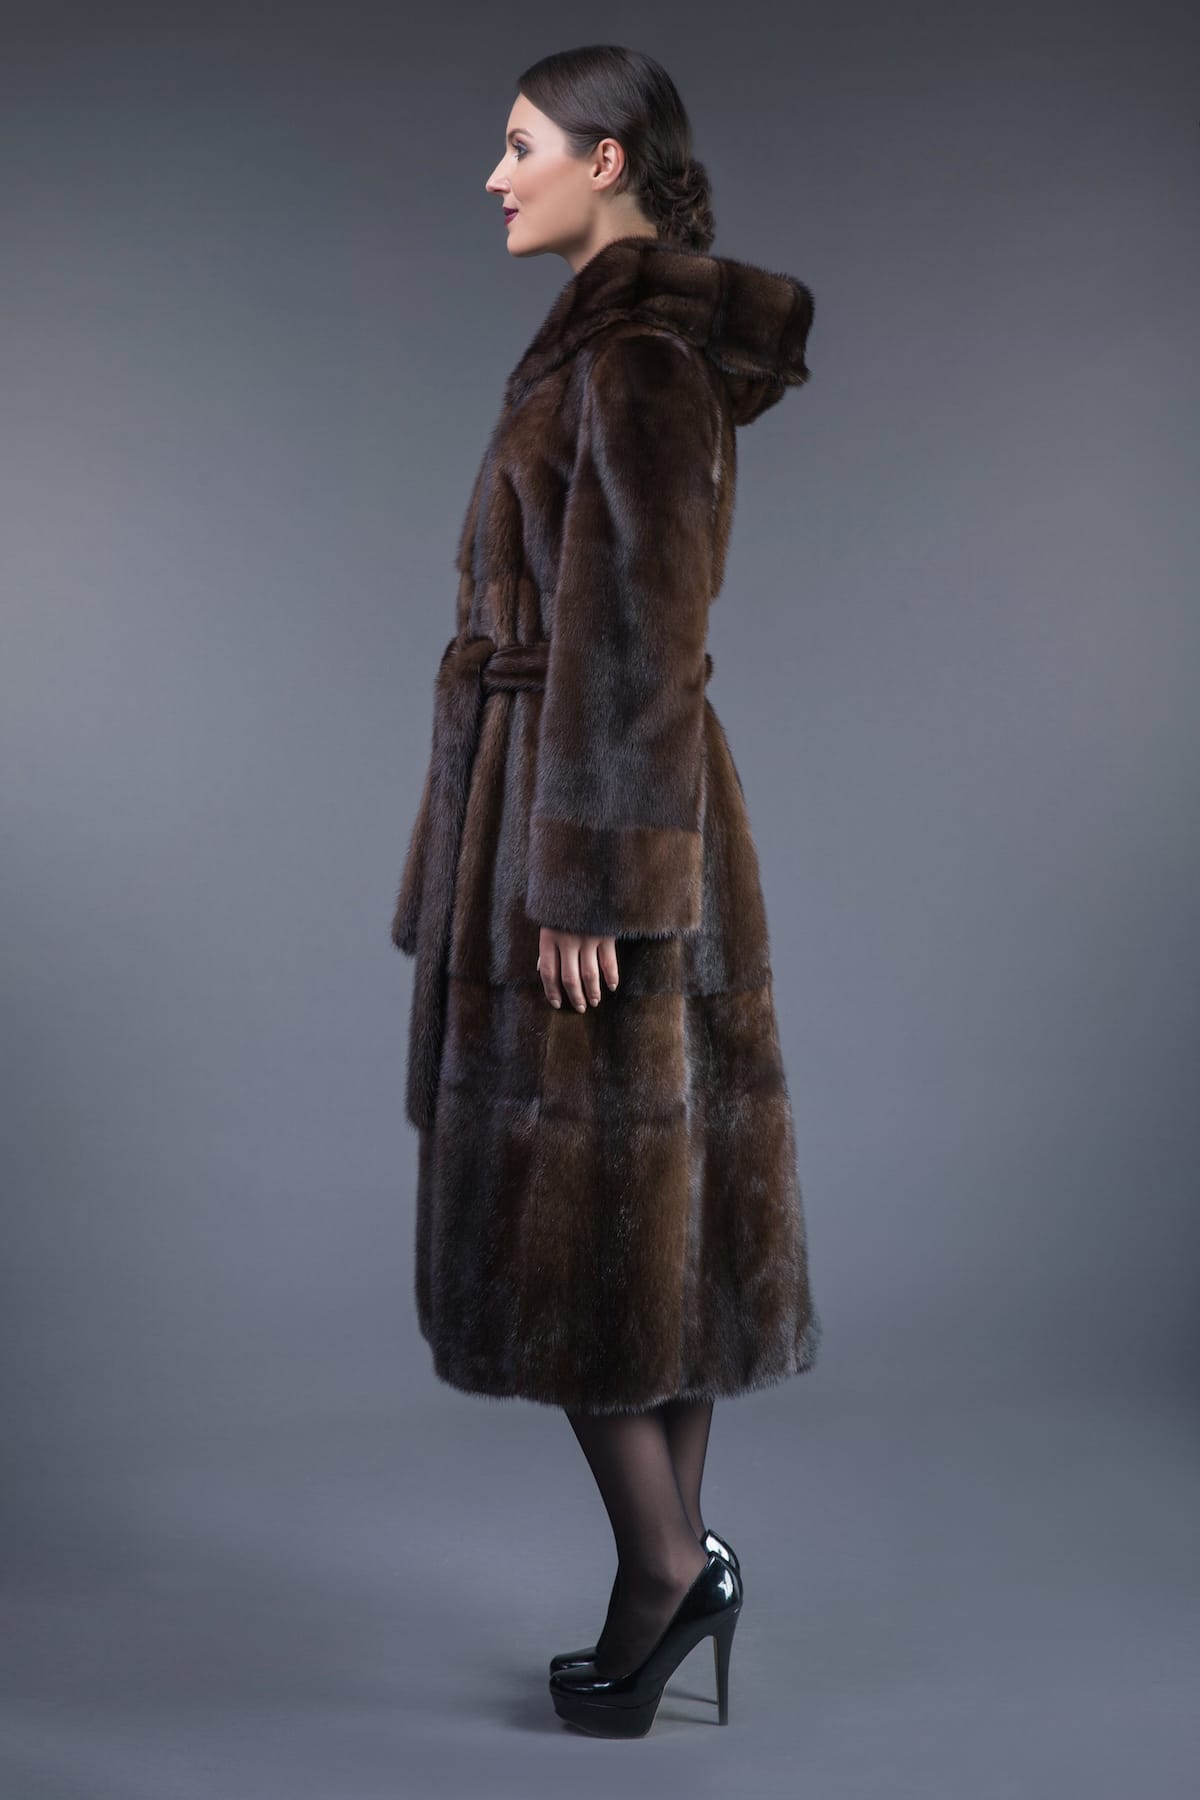 Natural Brown Mink Fur Hooded Coat Tied with Belt | Handmade by NordFur